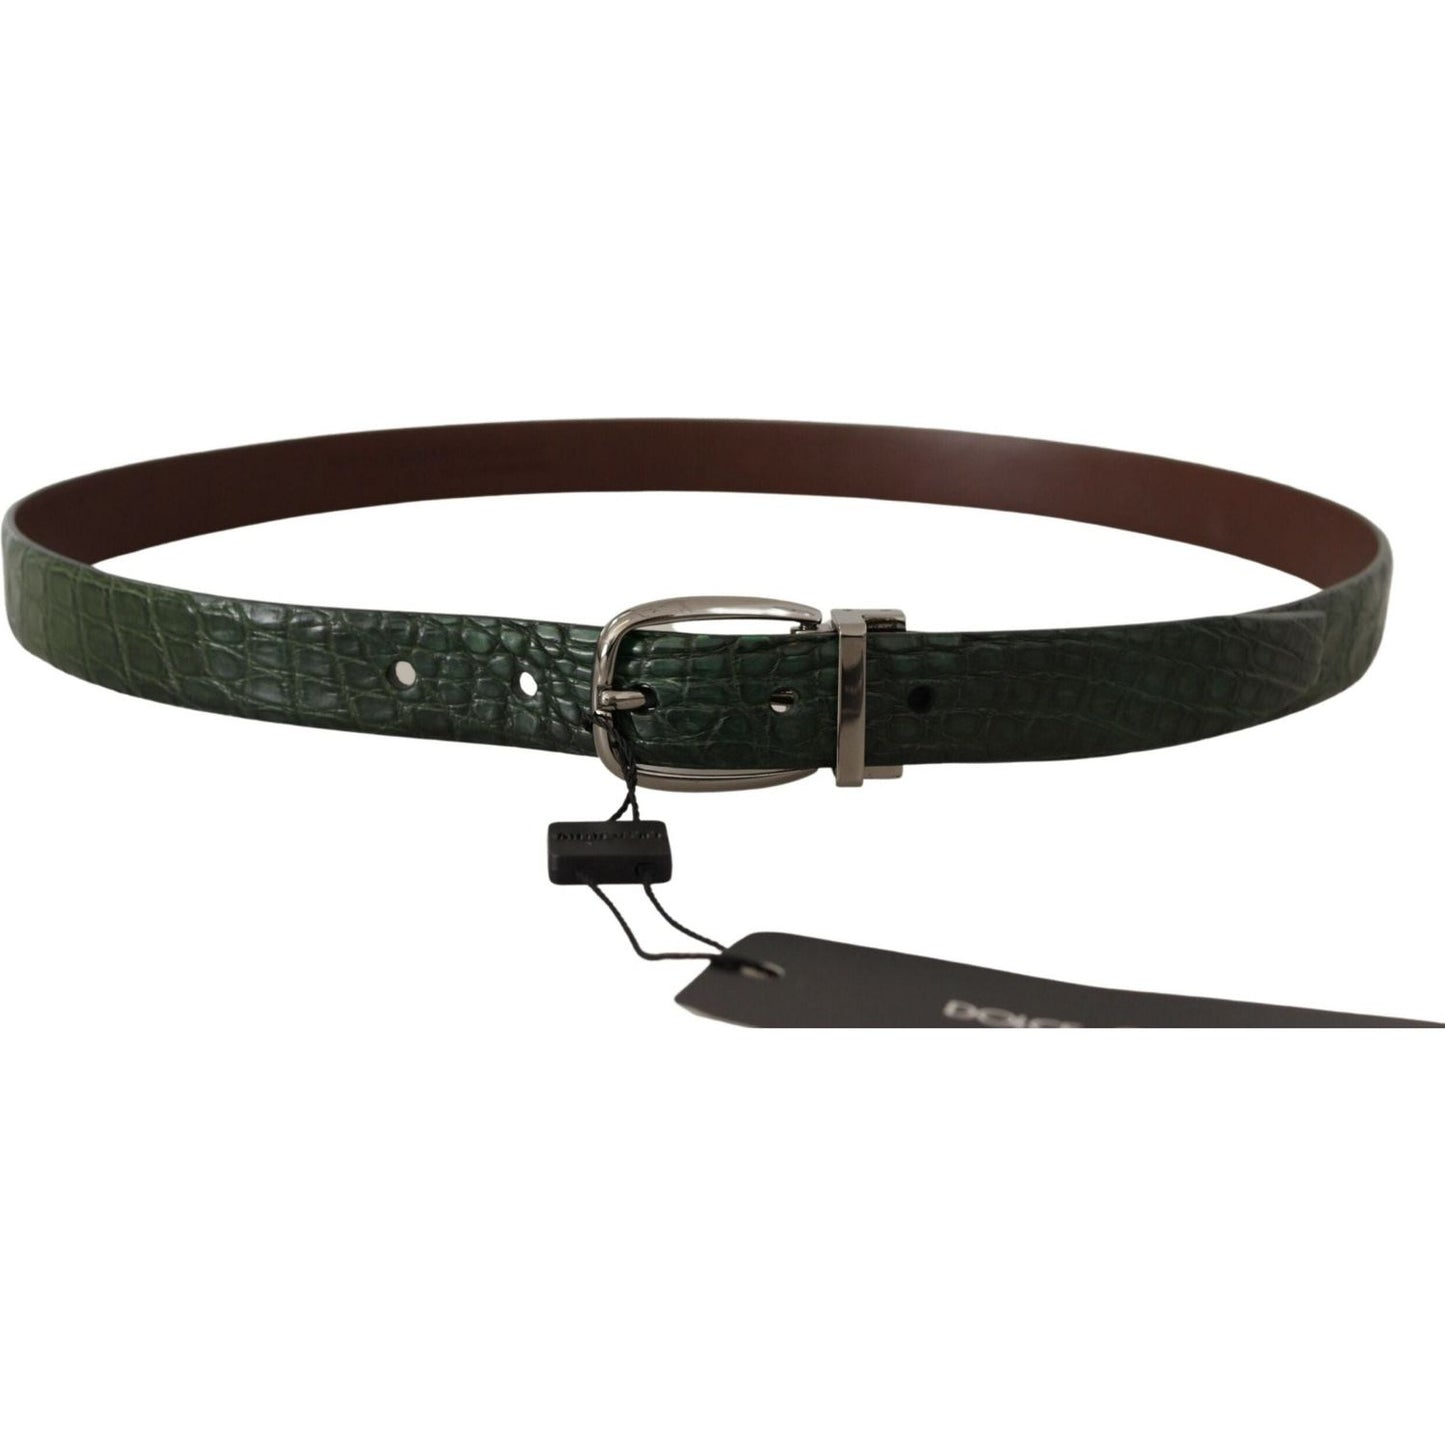 Dolce & Gabbana Elegant Italian Leather Crocodile Belt green-exotic-leather-silver-buckle-belt IMG_7888-1-scaled-f0007769-85a.jpg